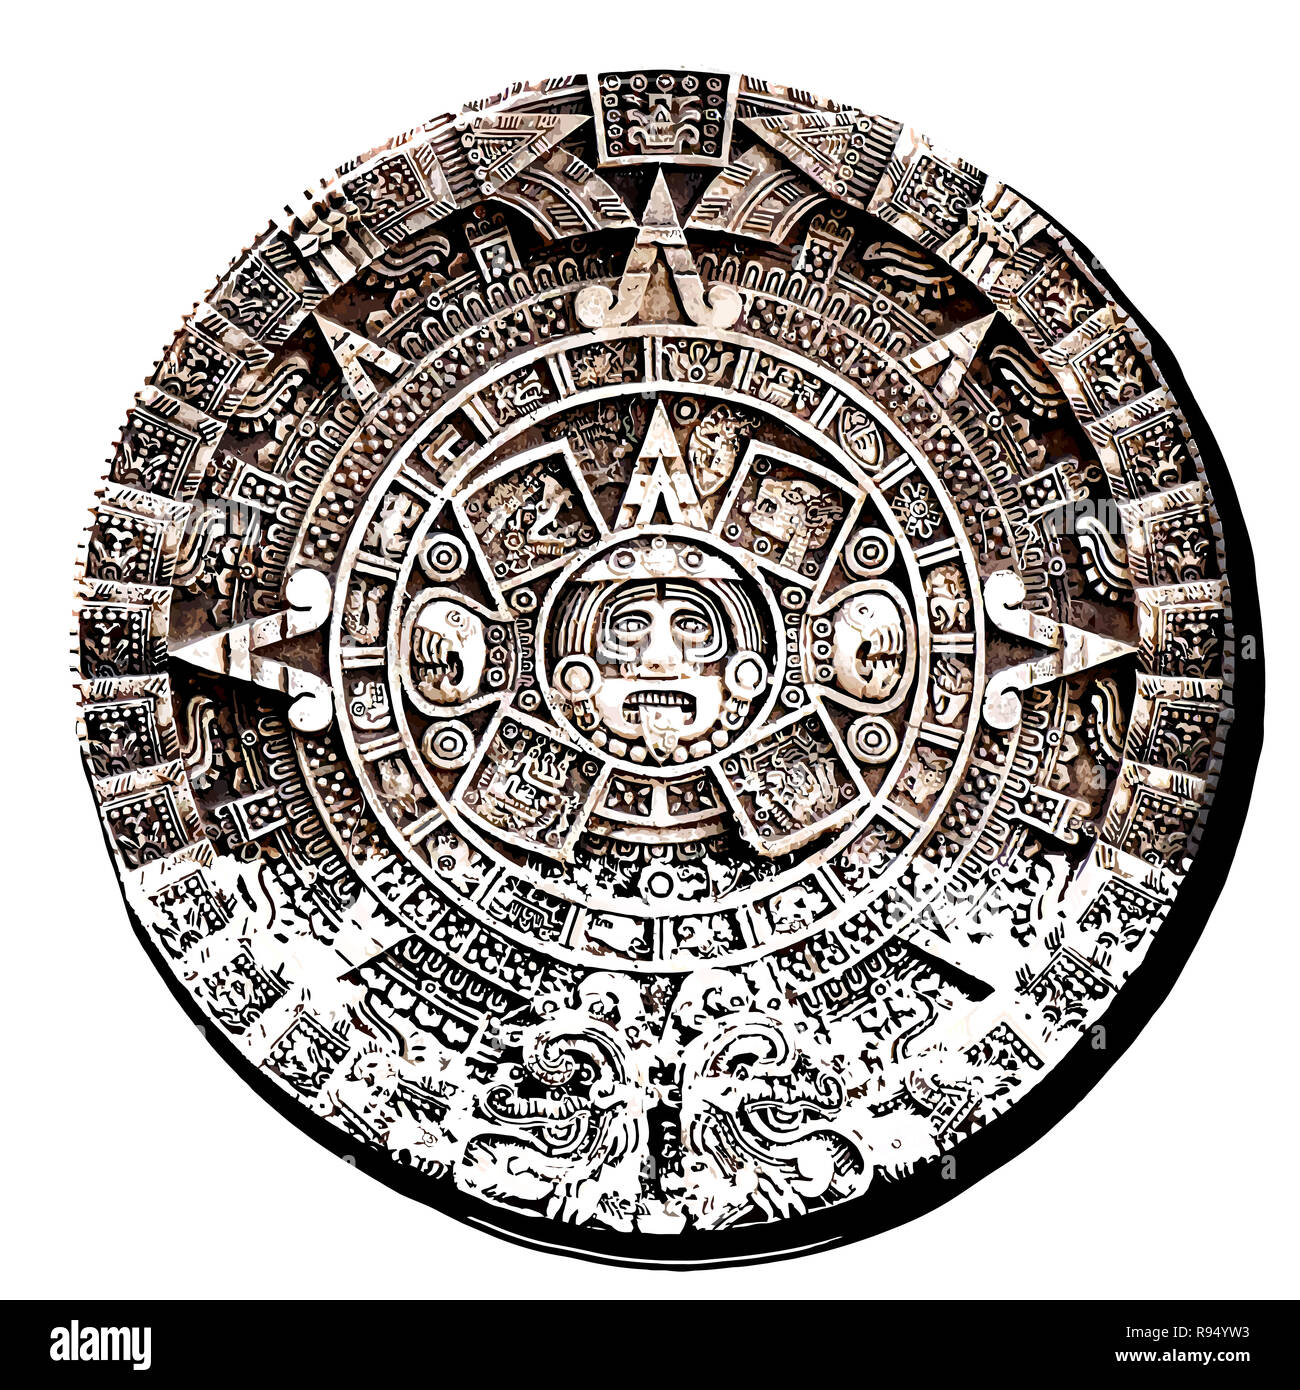 Календарь майя аудио слушать. Календарь Майя вектор. Ацтекский календарь астрономия. Календарь ацтеков вектор. Конец календаря Майя.